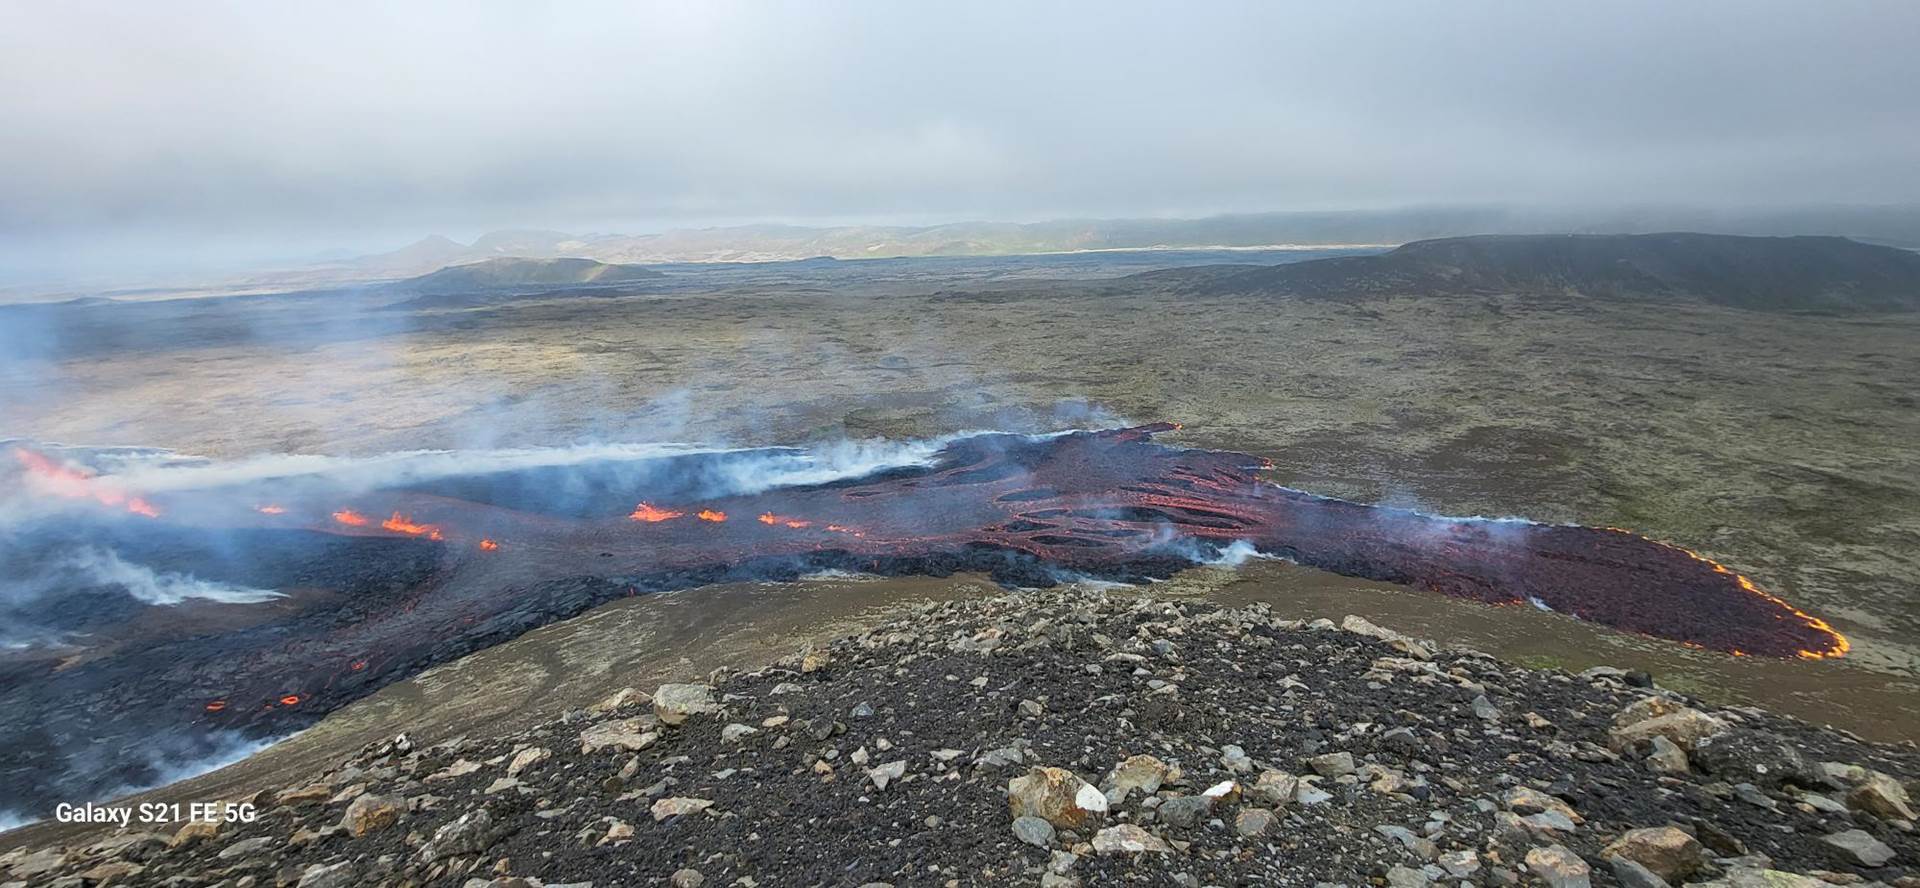 Icelandic Government advice following a volcanic eruption on the Reykjanes peninsula - mynd